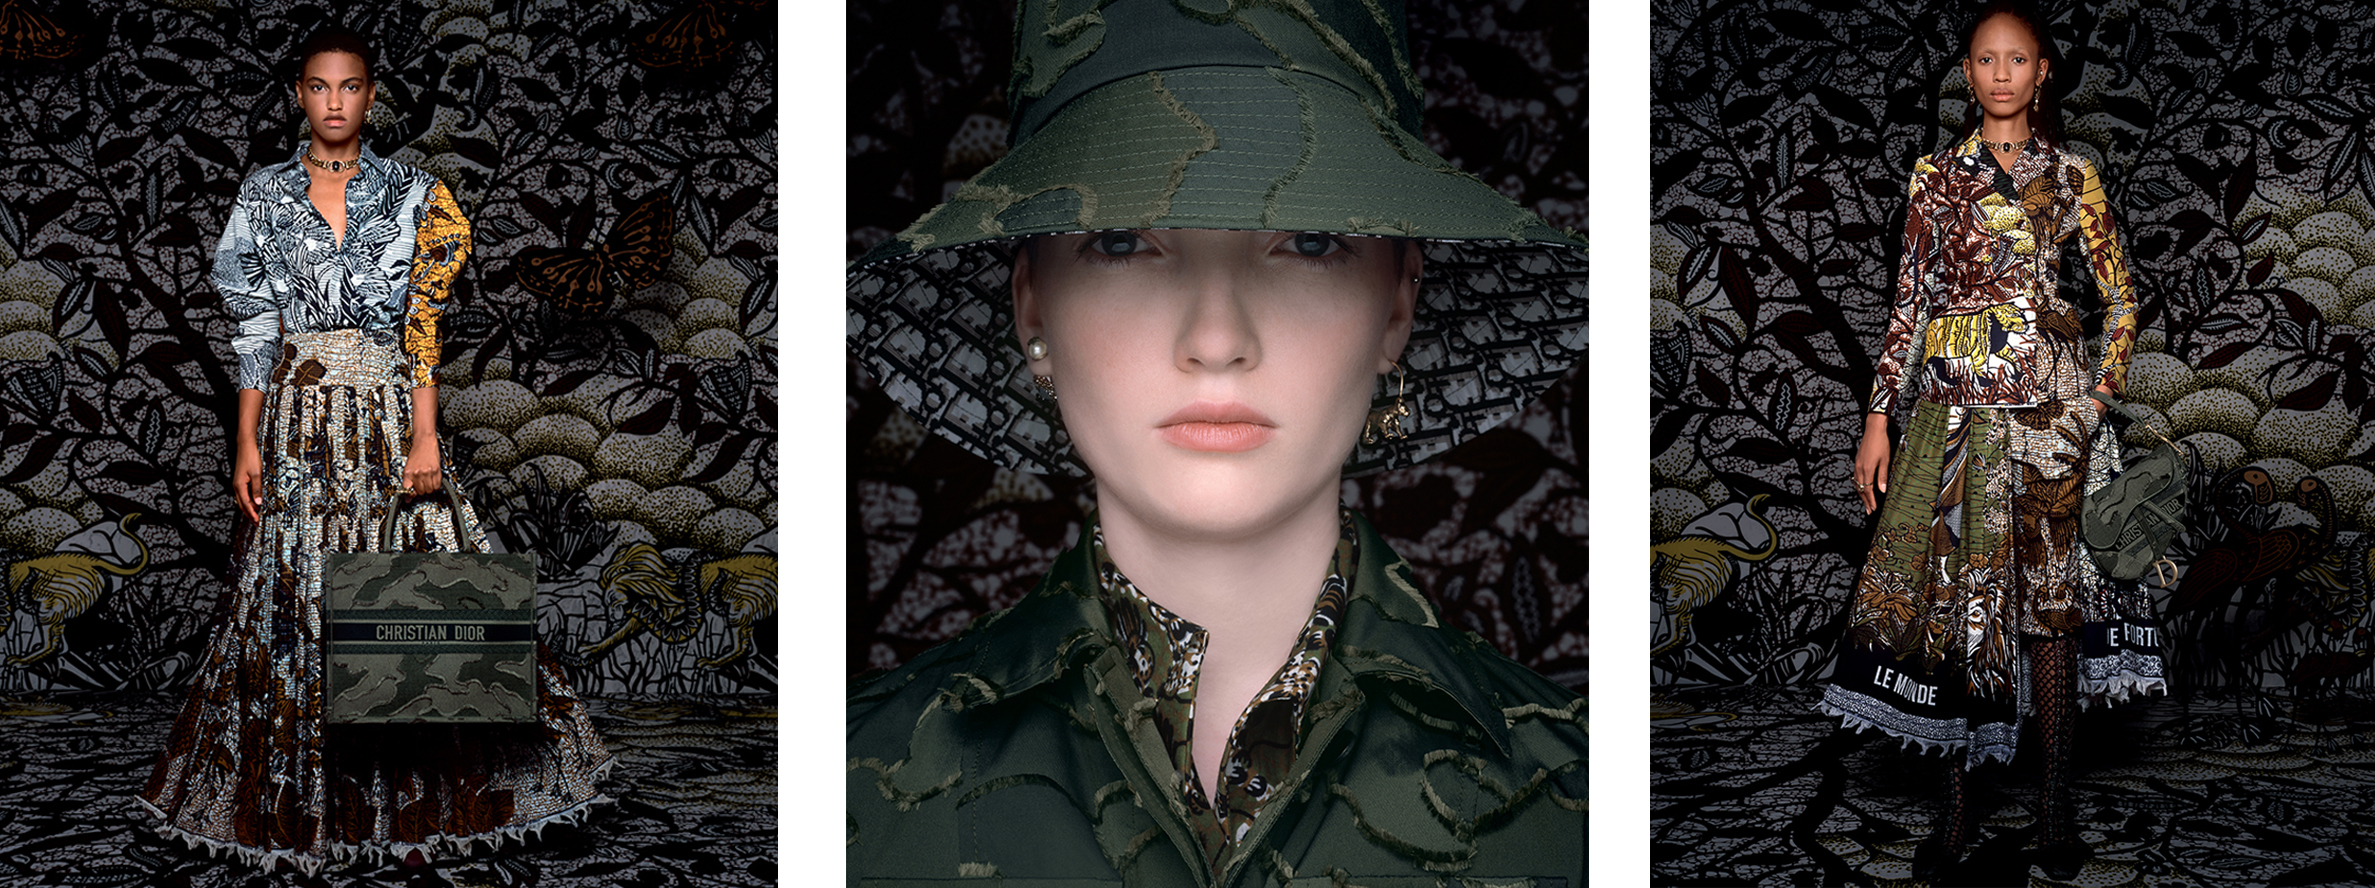 Christian Dior Camouflage Logo Bucket Hat